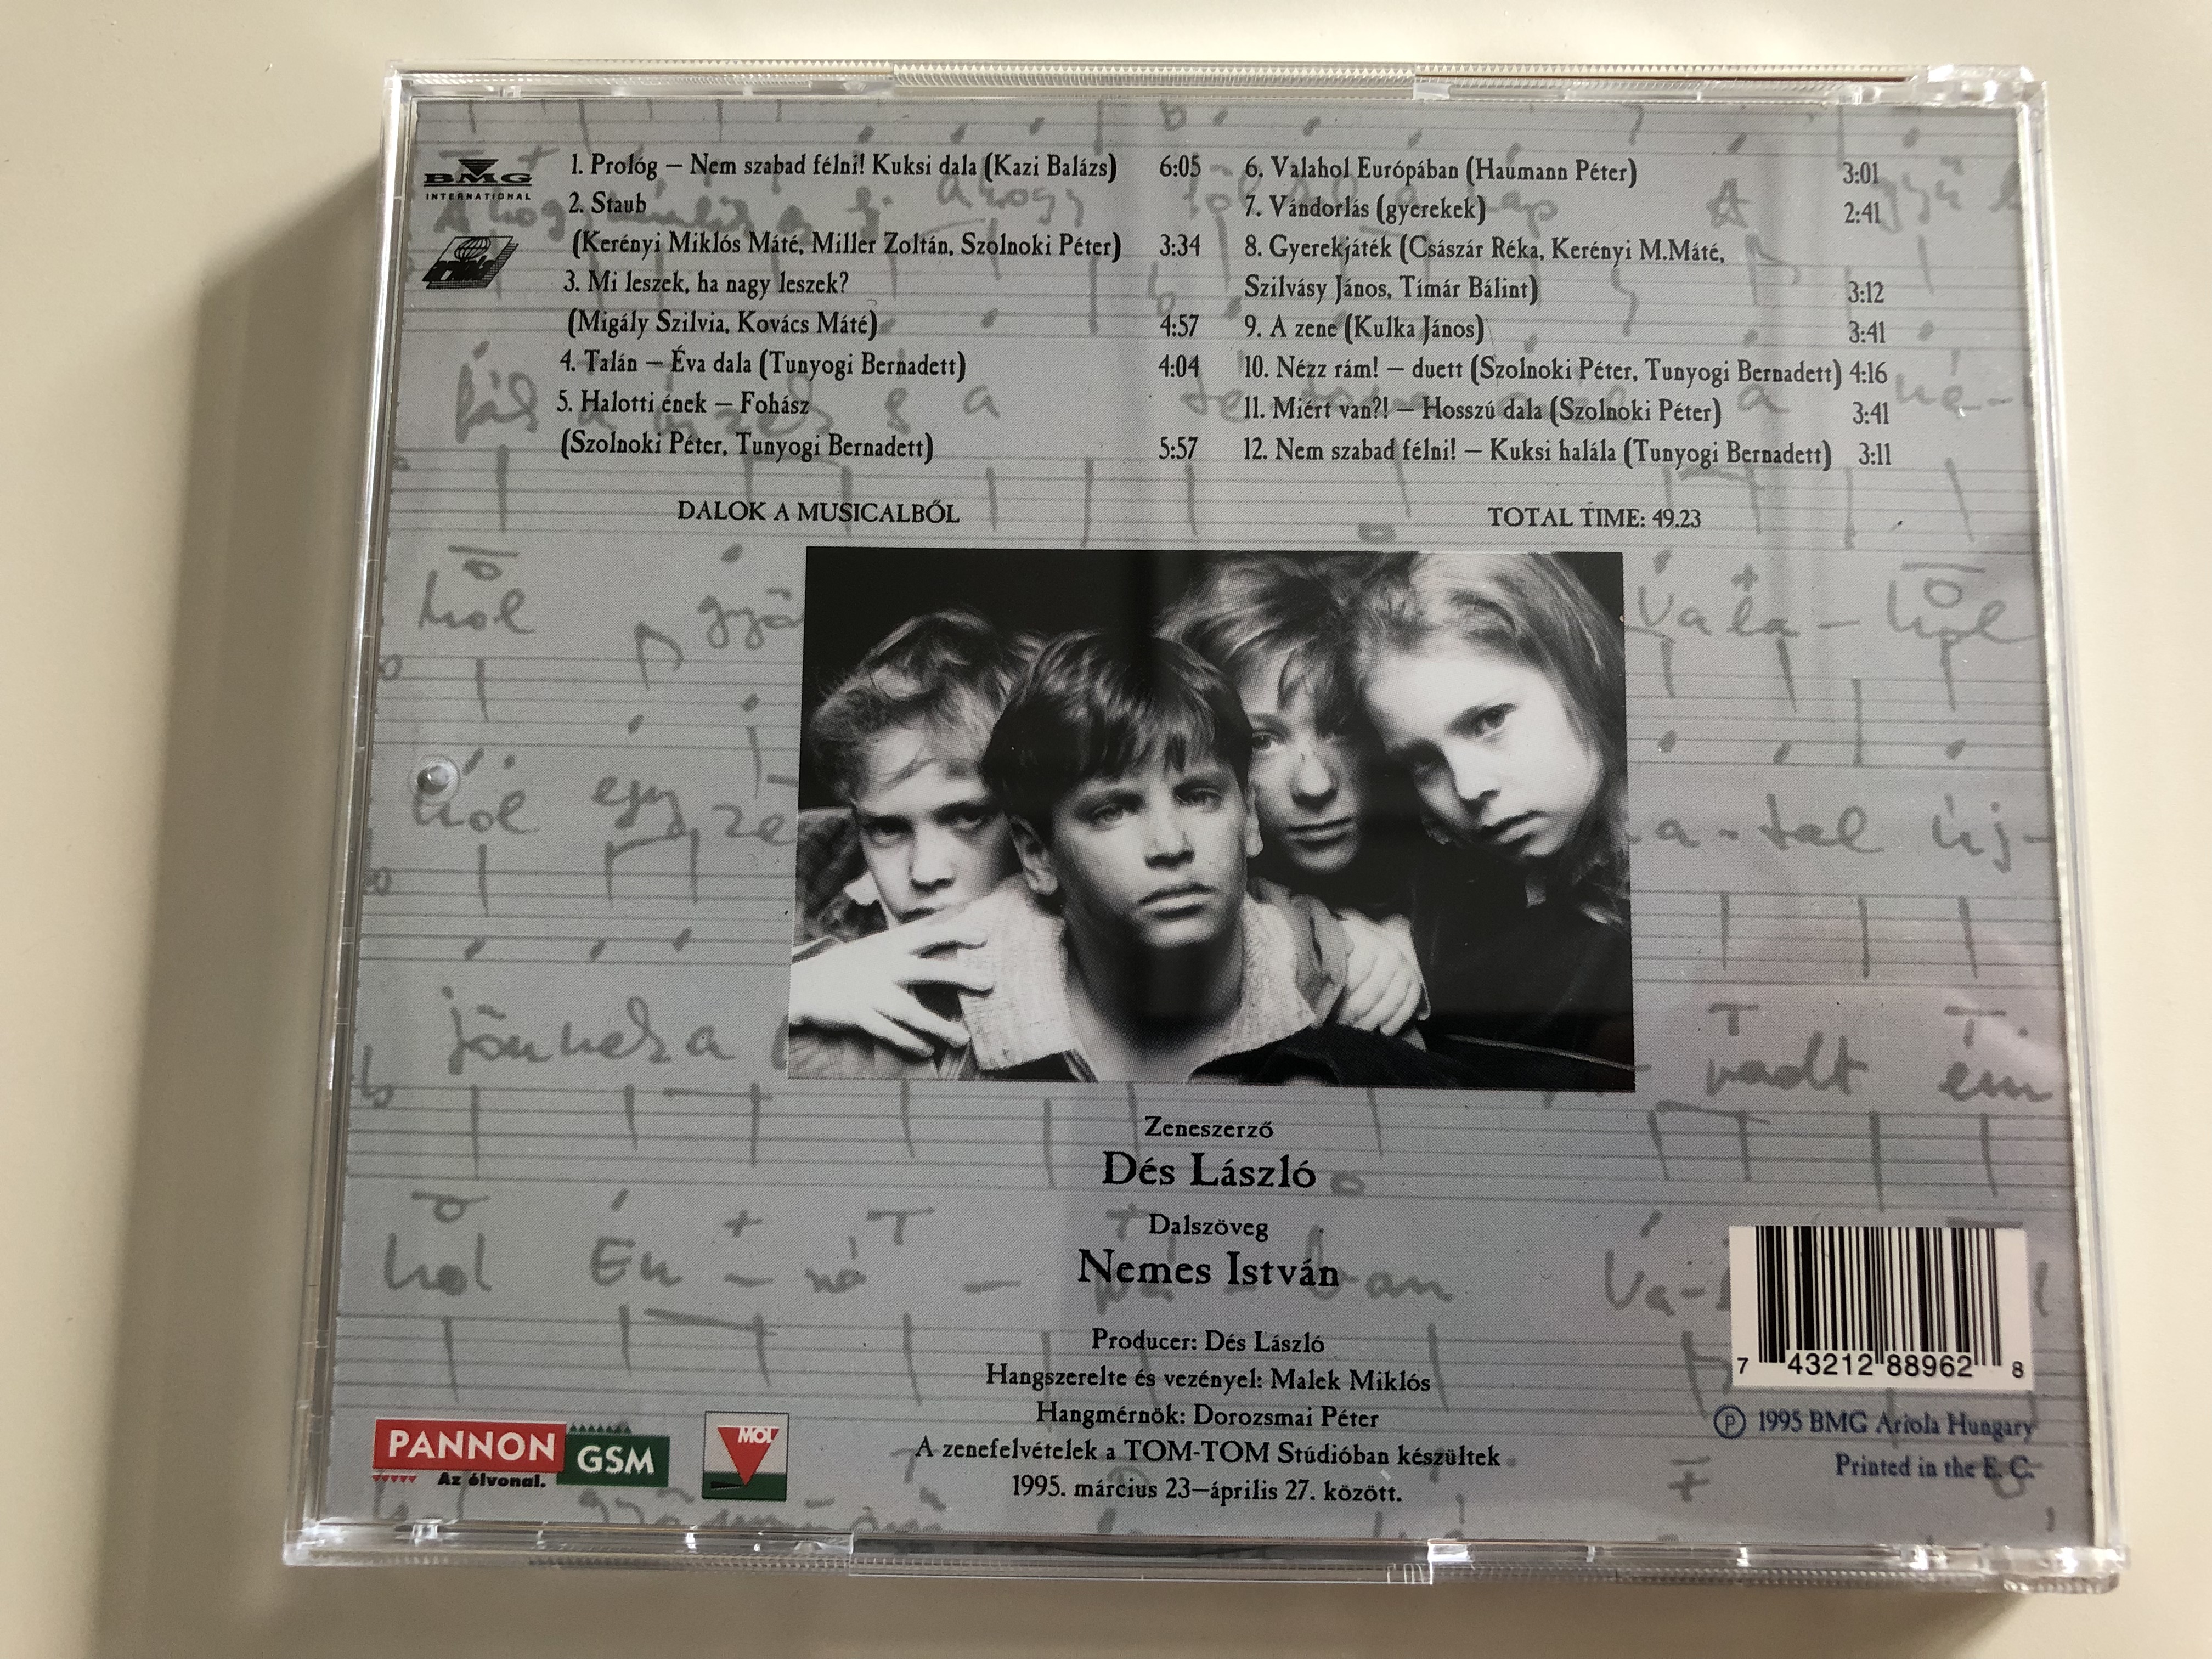 valahol-eur-p-ban-highlights-d-s-l-szl-nemes-istv-n-songs-from-the-musical-audio-cd-1995-bmg-9-.jpg